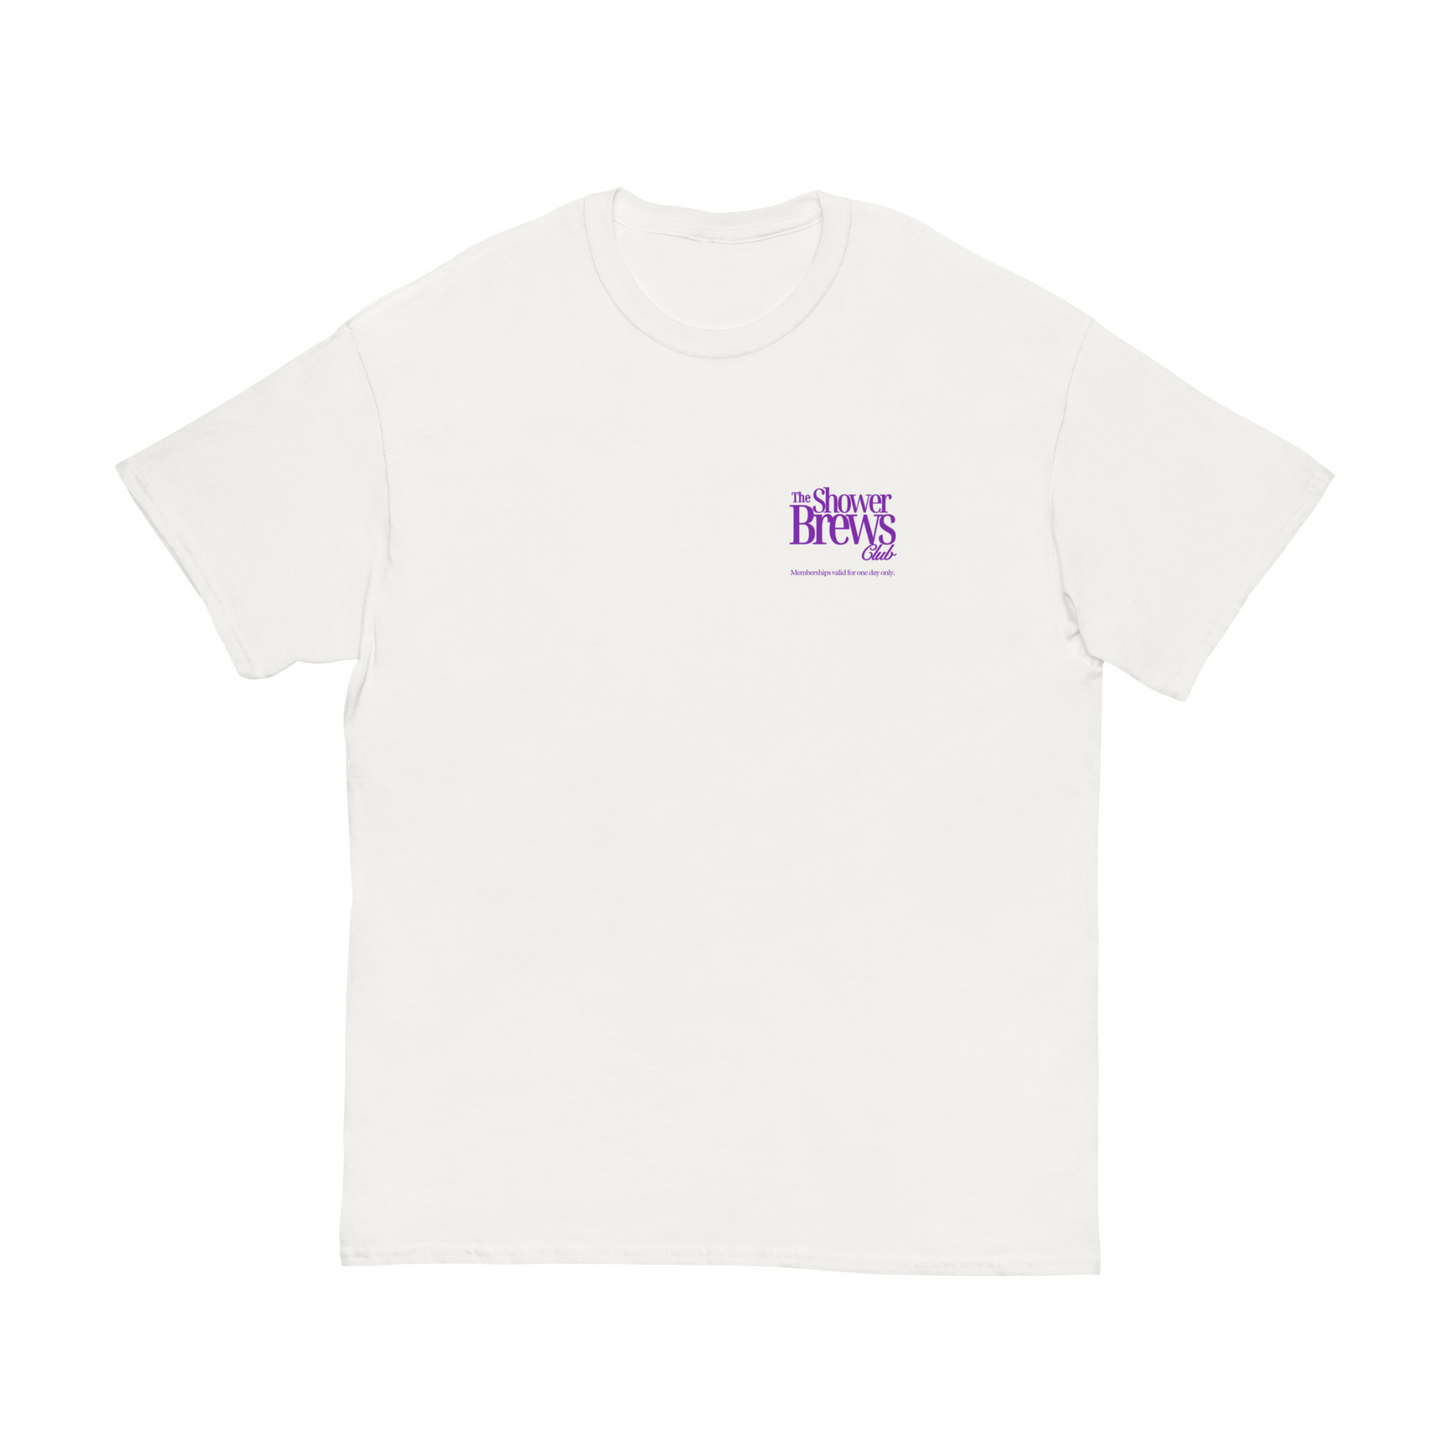 'The Shower Brews Club' T-Shirt in White & Purple